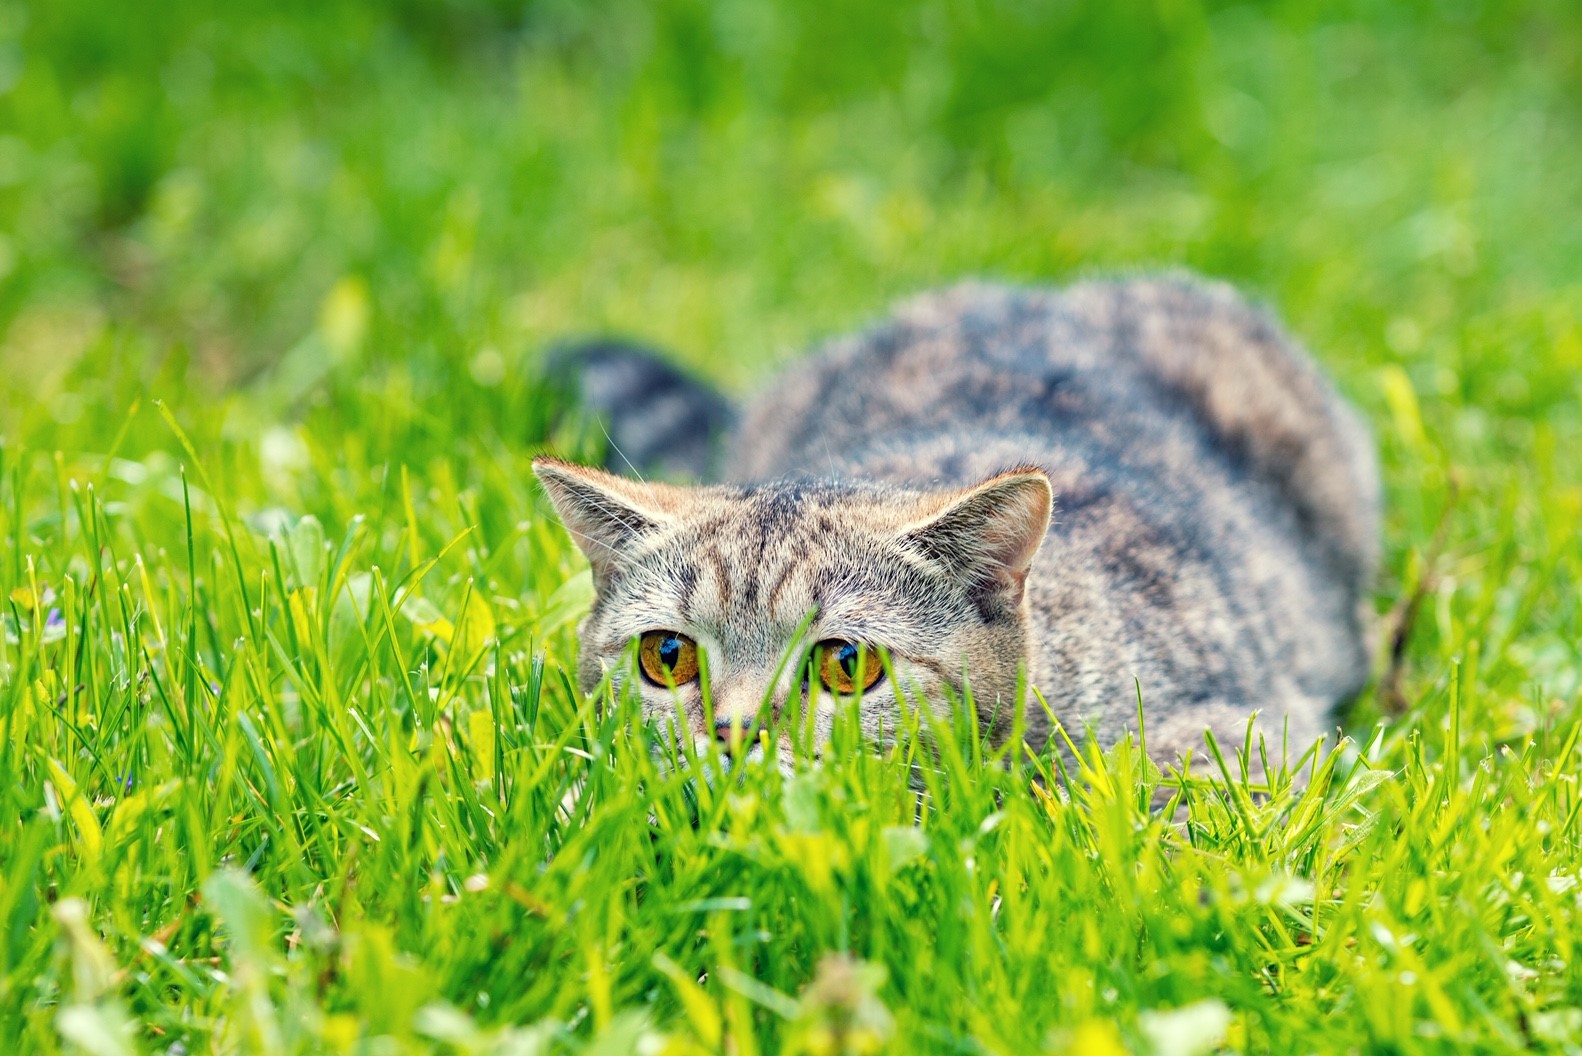 Do indoor cats need grass